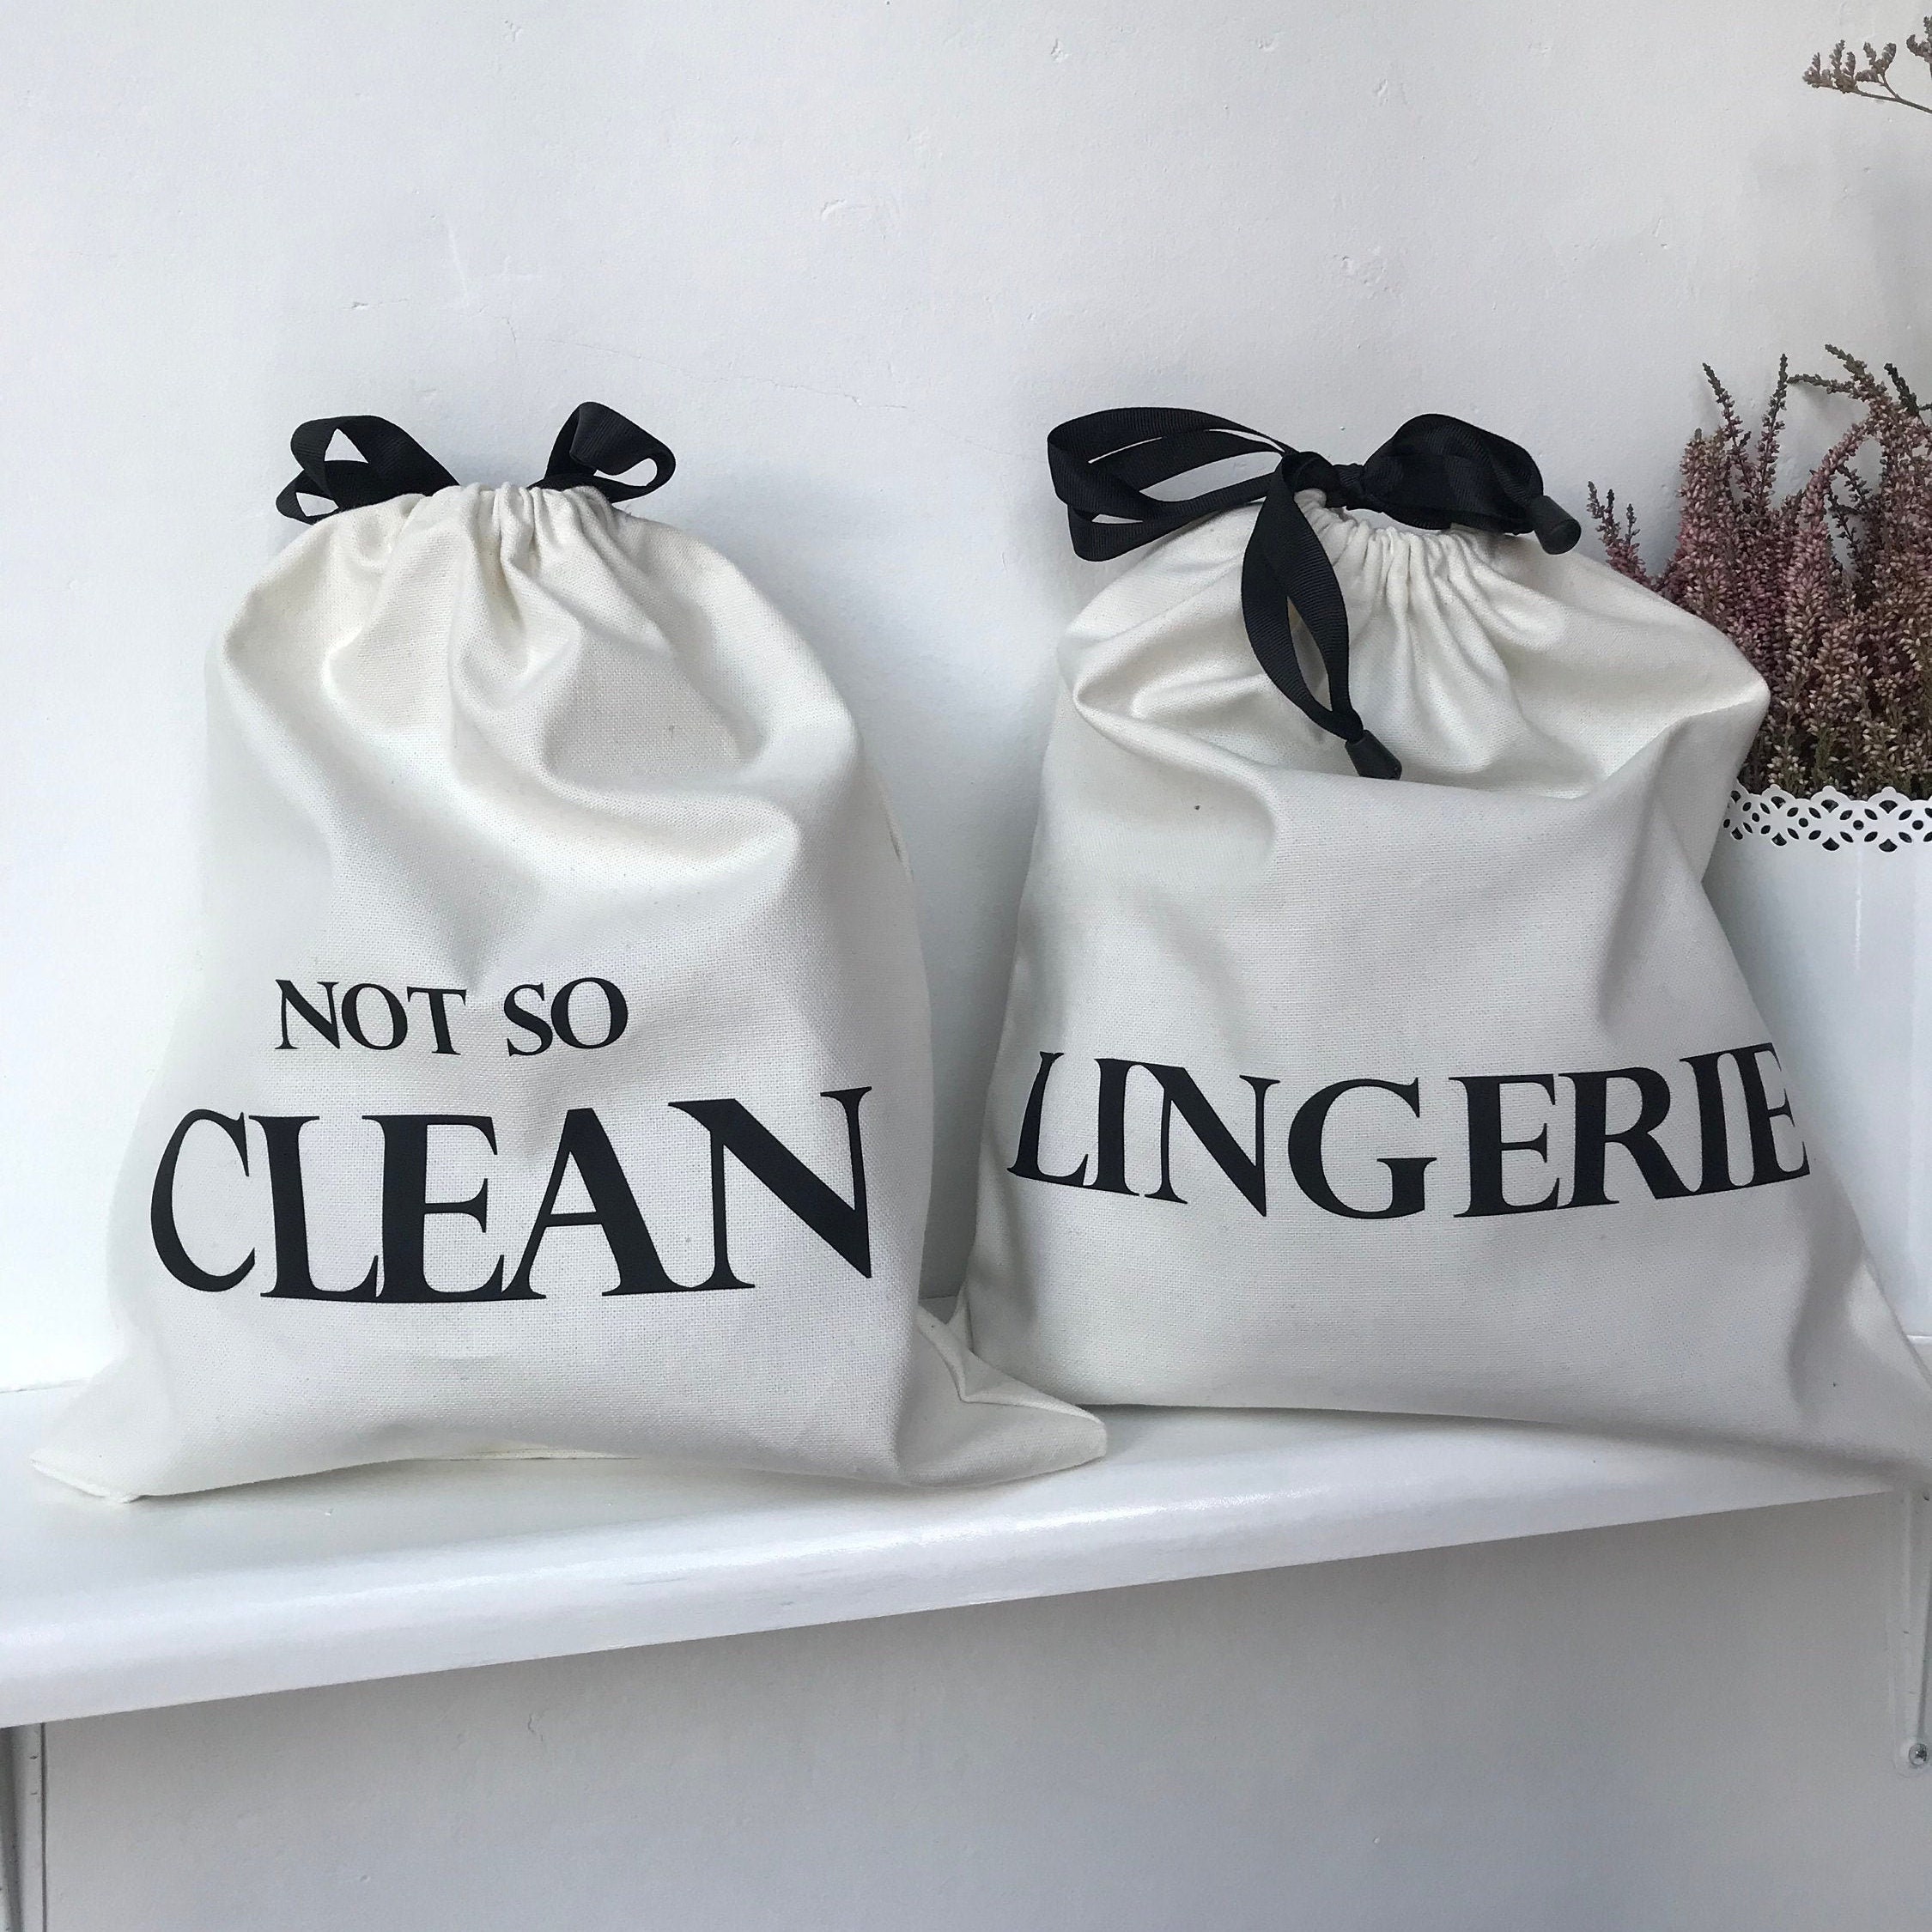 Ann Seton Satin Lingerie Hosiery Bag with original Ann Seton Box. | eBay